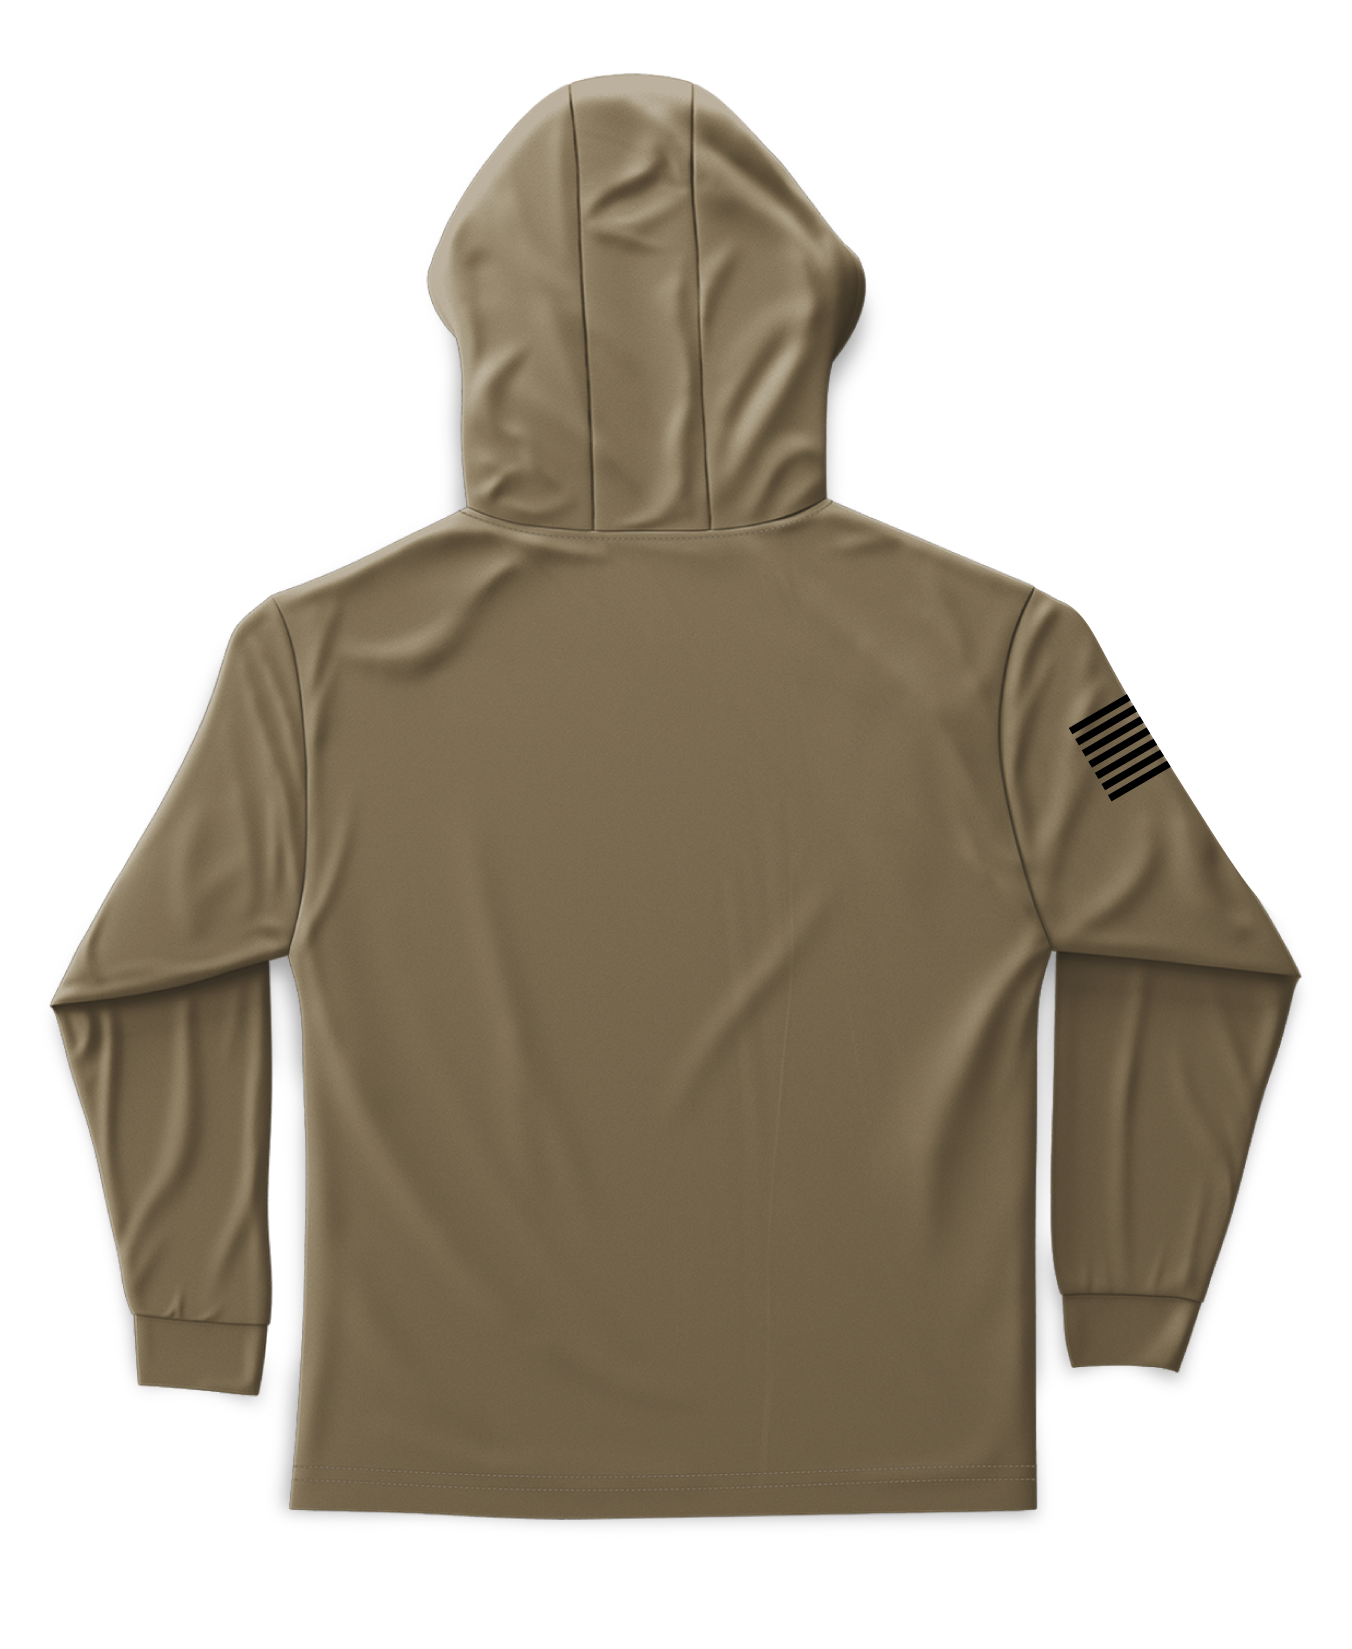 Core Men's Hooded Performance Sweatshirt - Original - Tan499/Black